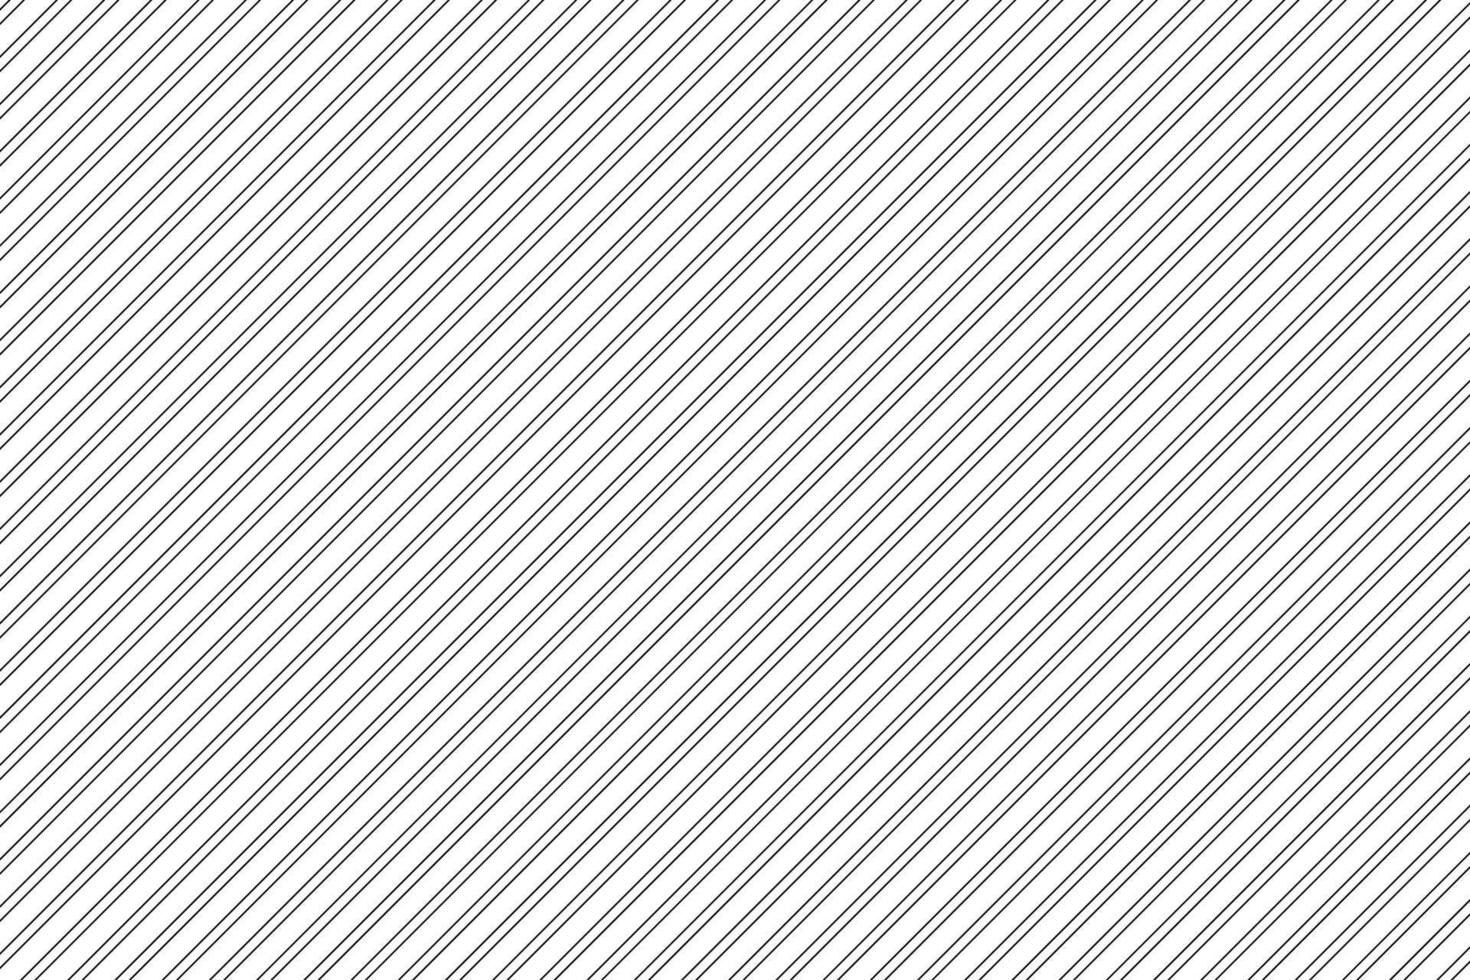 abstrakt diagonal rand hetero linje mönster design. vektor